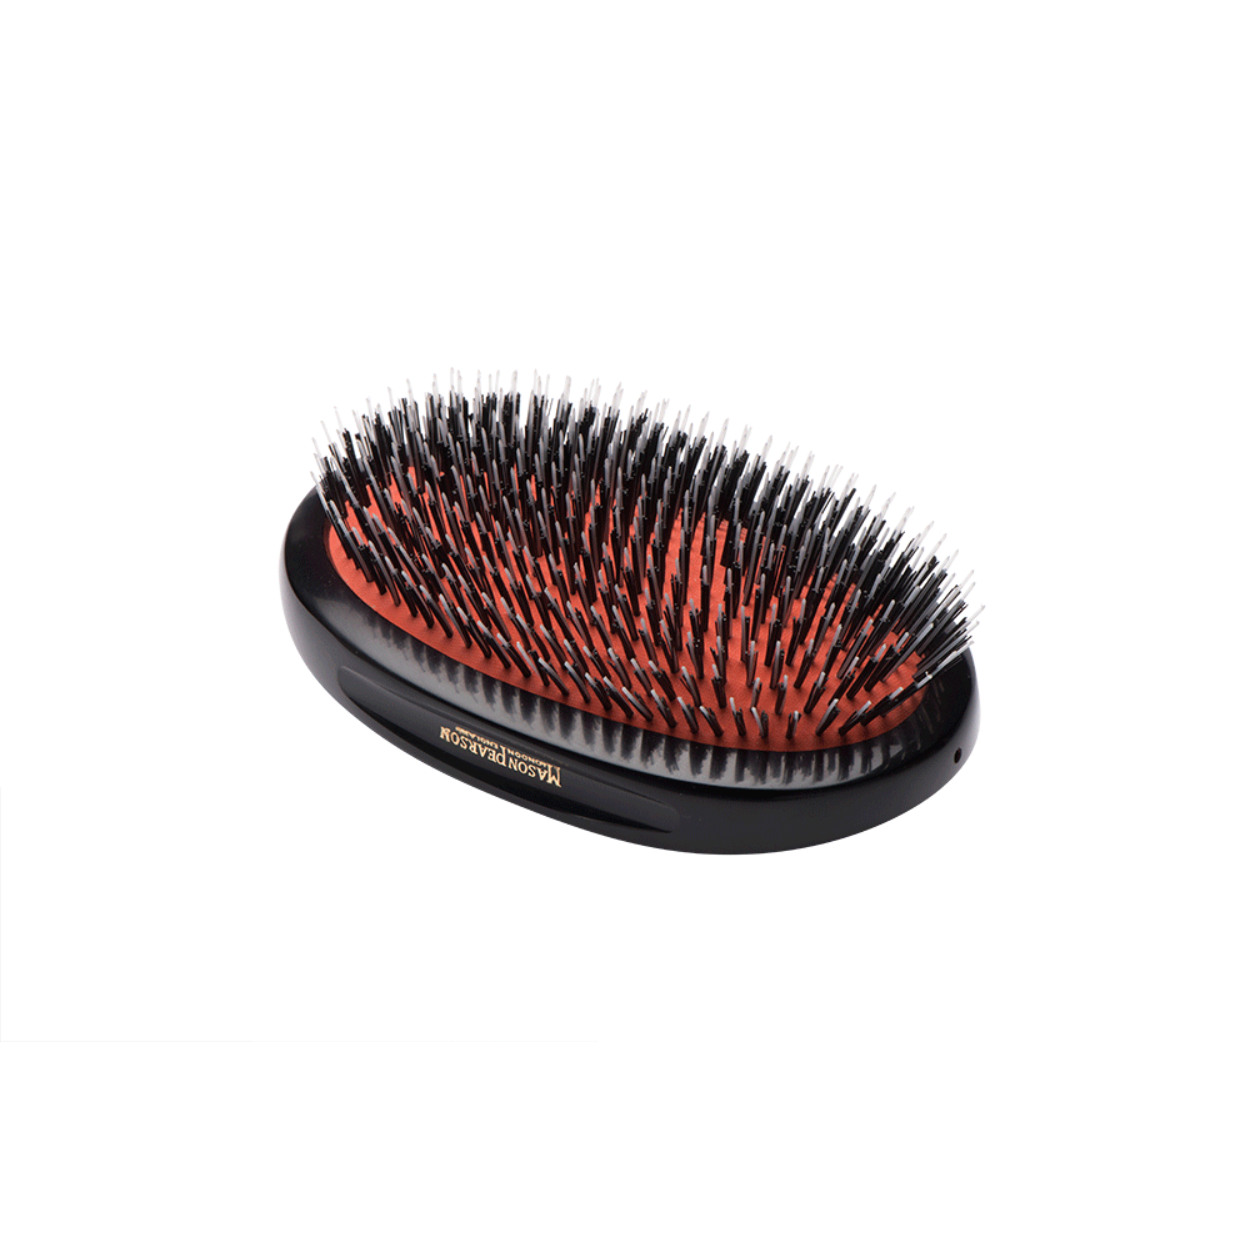 Military Popular Bristle & Nylon Hairbrush BN1M